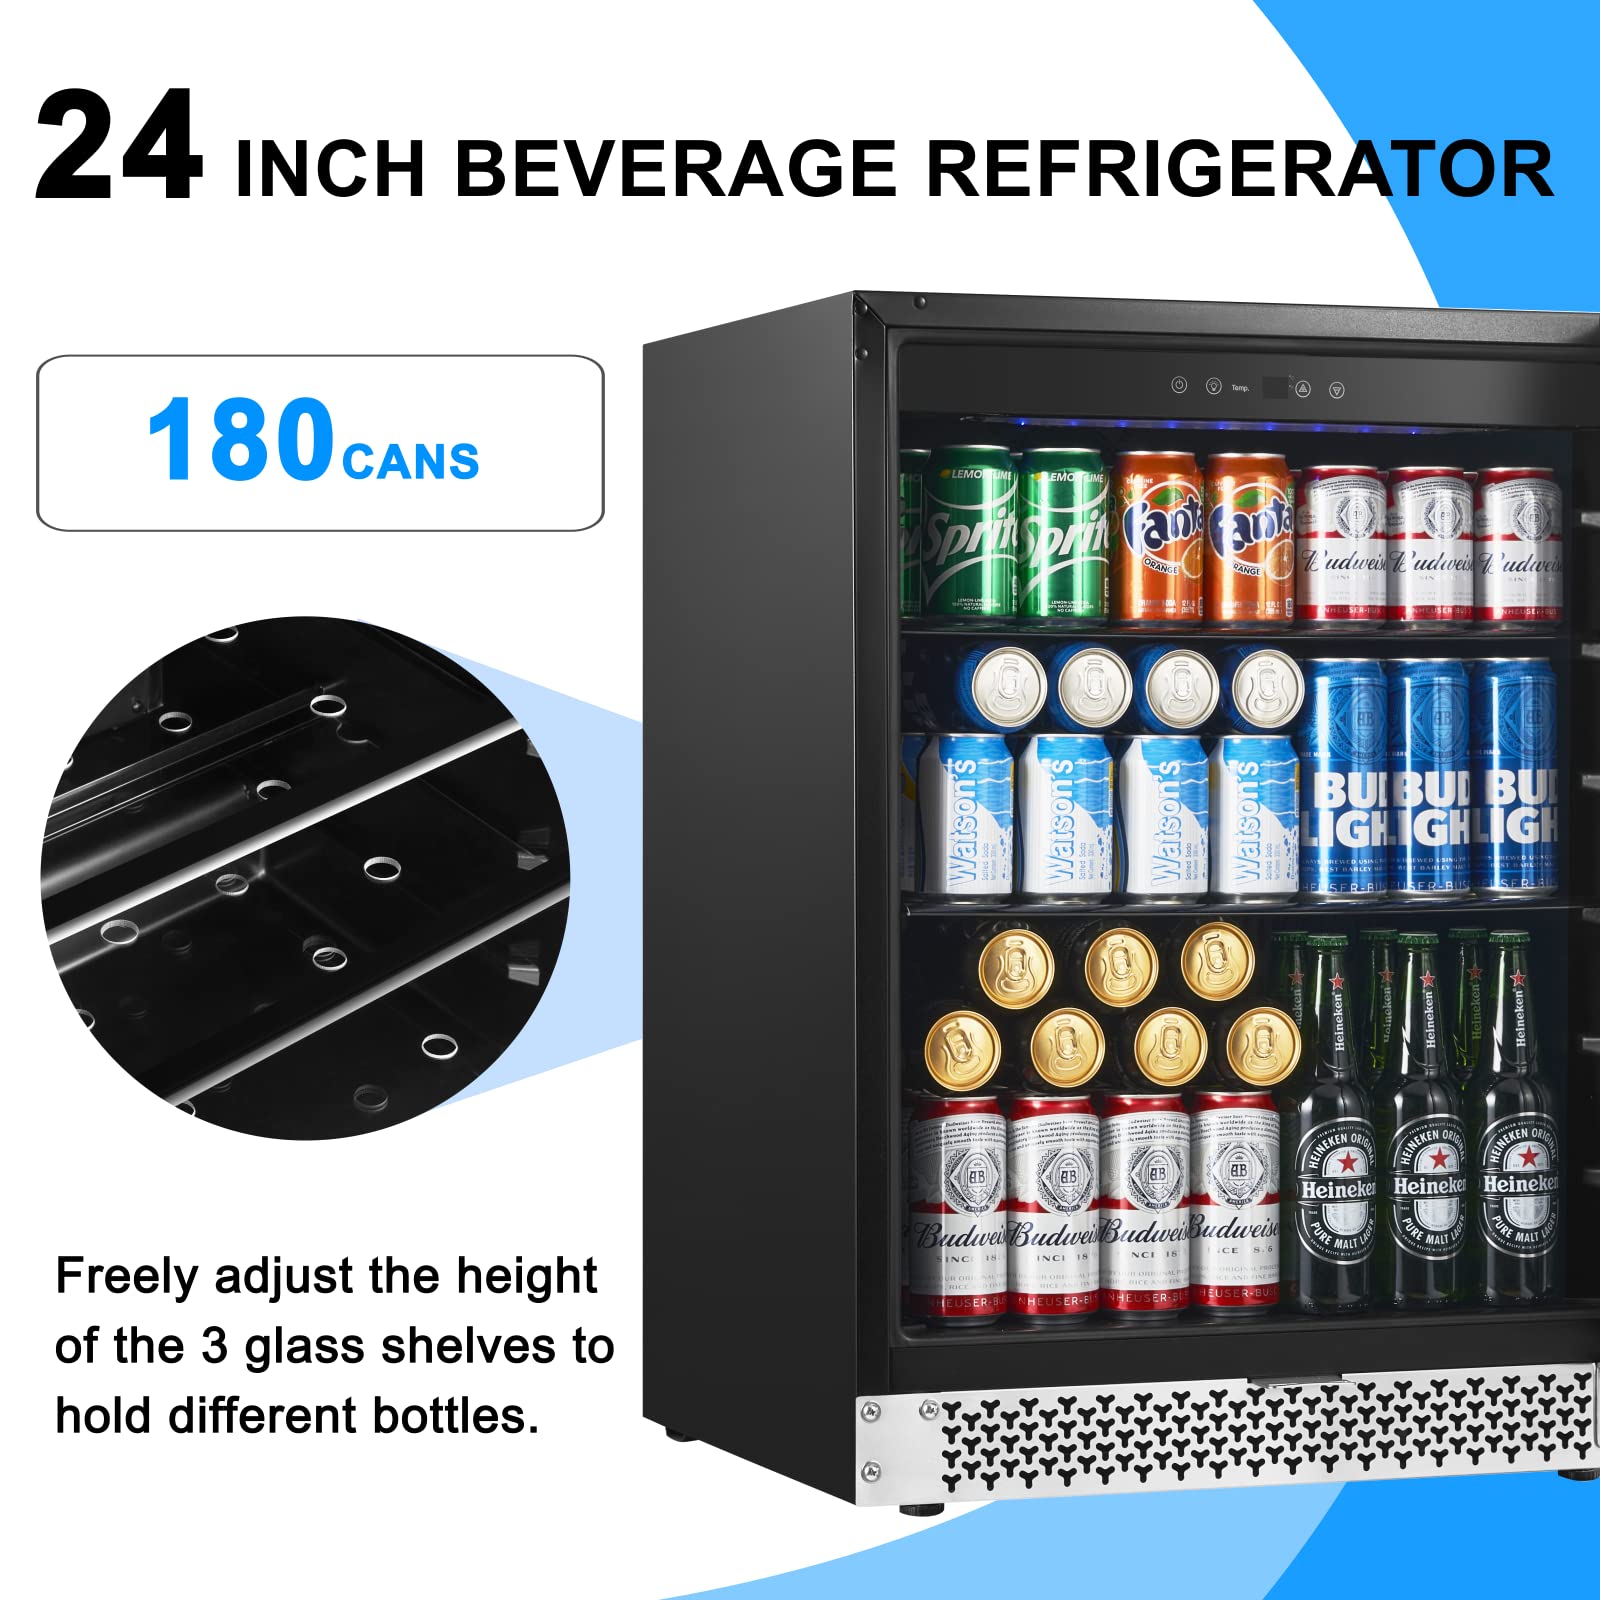 Yeego 24 Inch Beverage Refrigerator, 180can Beer Fridge Removeable Racks emperature 37-65°F, Beverage Cooler Built in Counter or Freestanding, with Glass Door, Lock, Quiet Operation